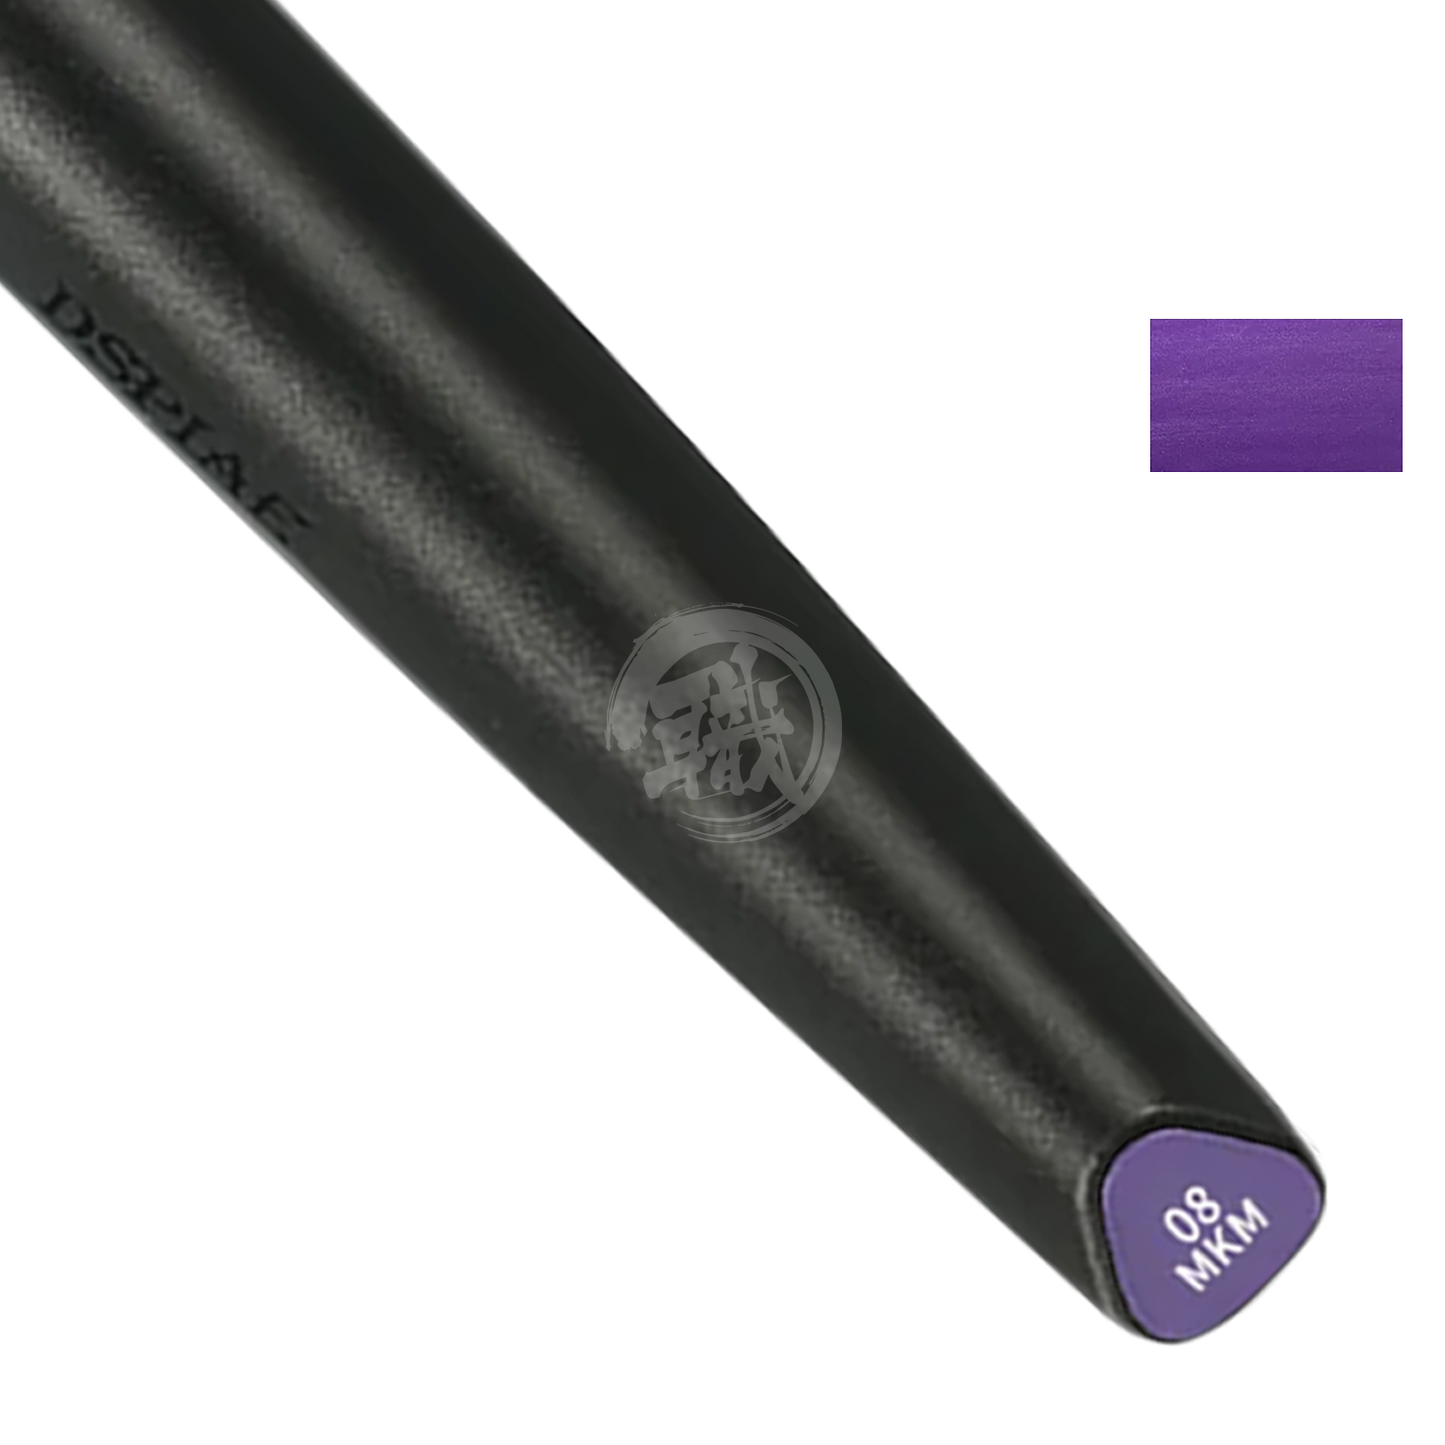 DSPIAE - MKM-08 Metallic Purple Soft Tip Acrylic Marker - ShokuninGunpla